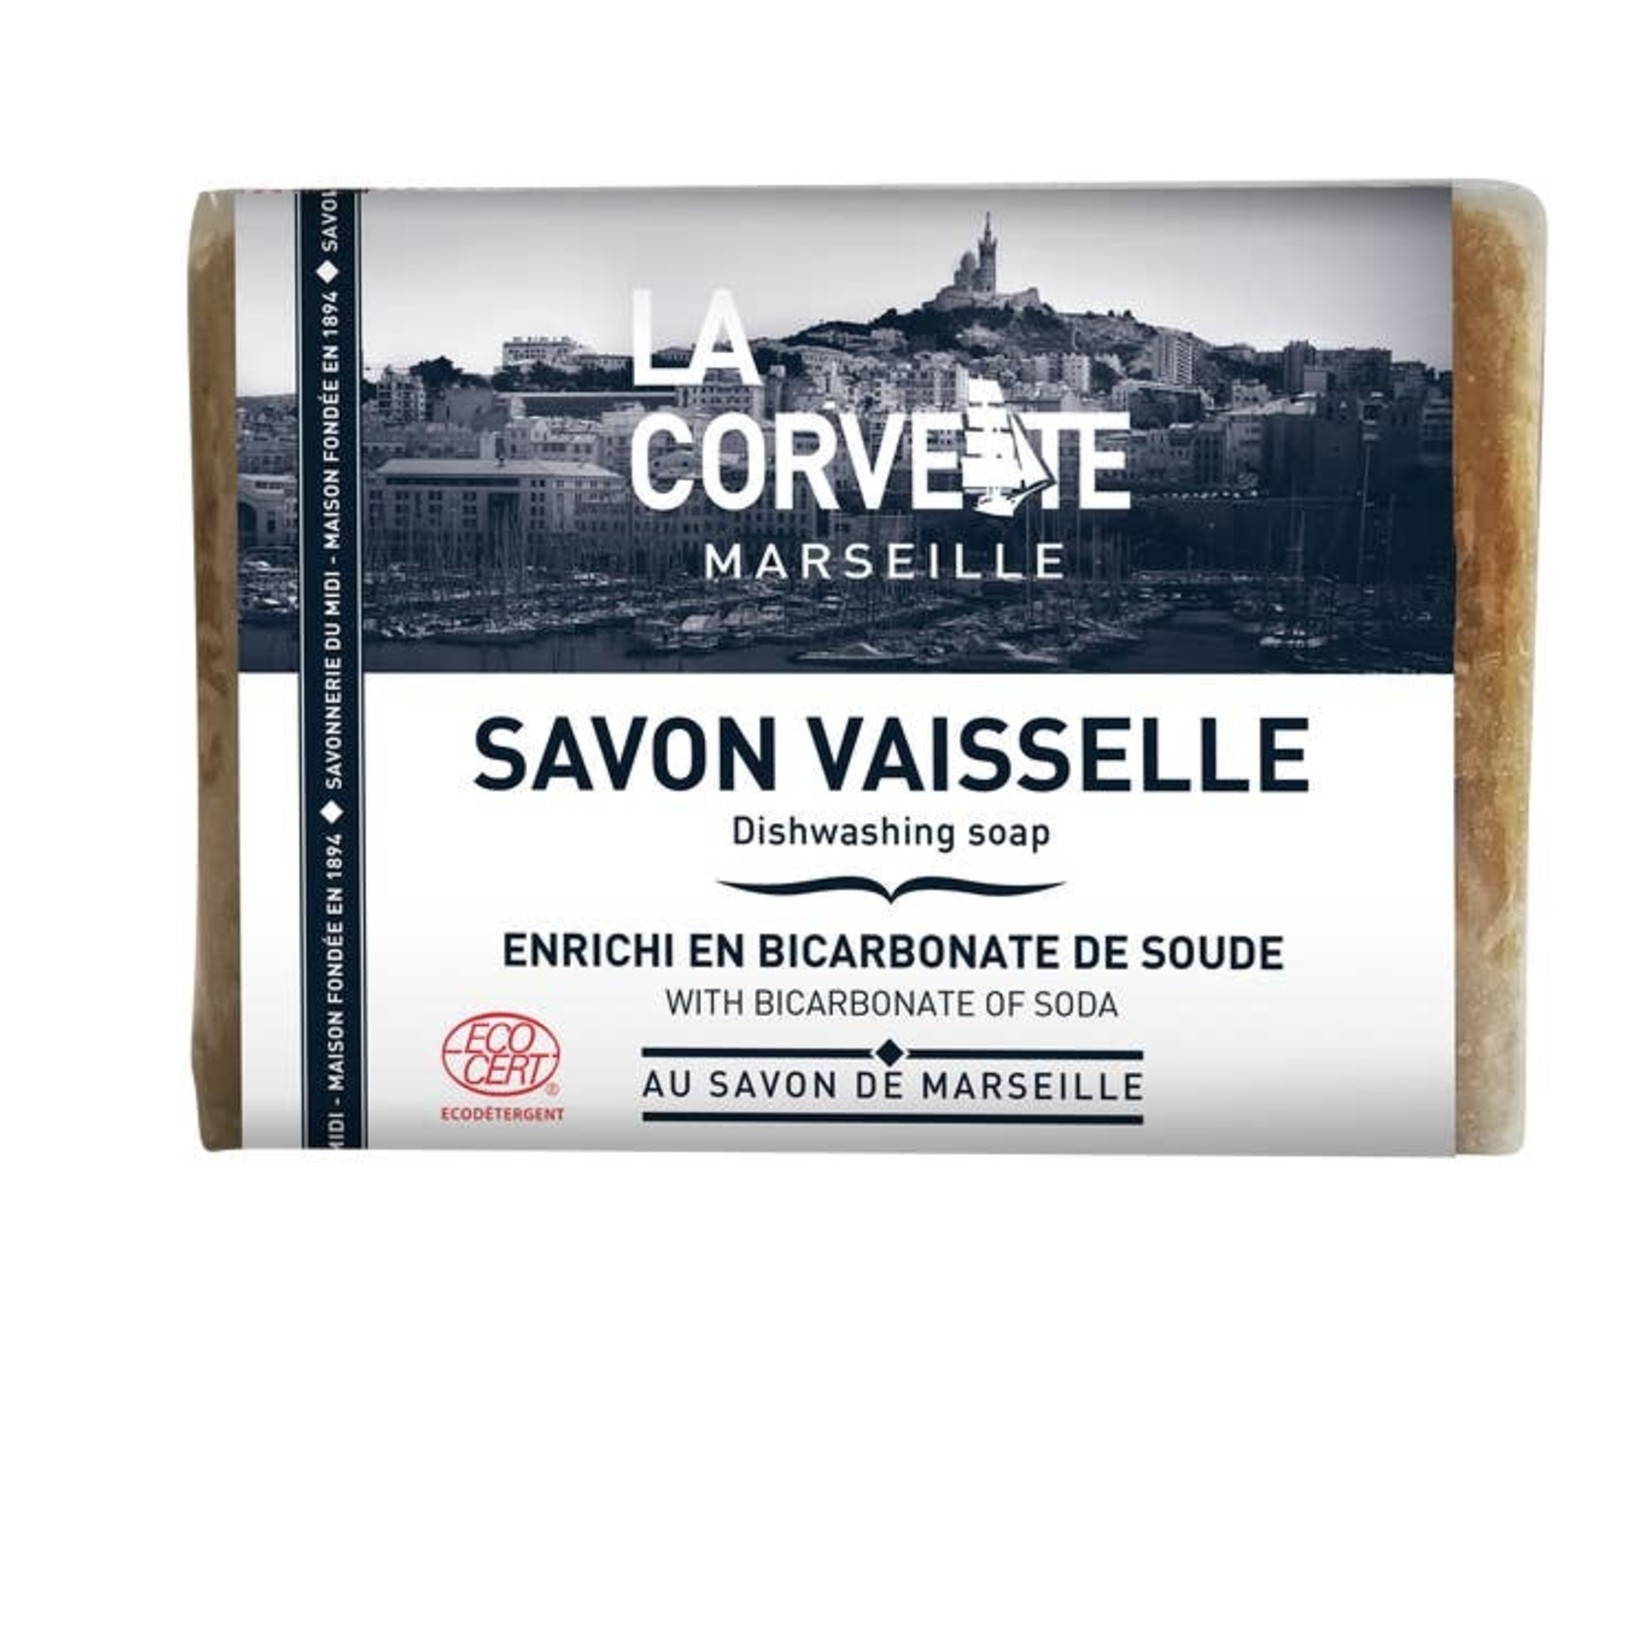 La Corvette Marseille - Dishwashing Soap